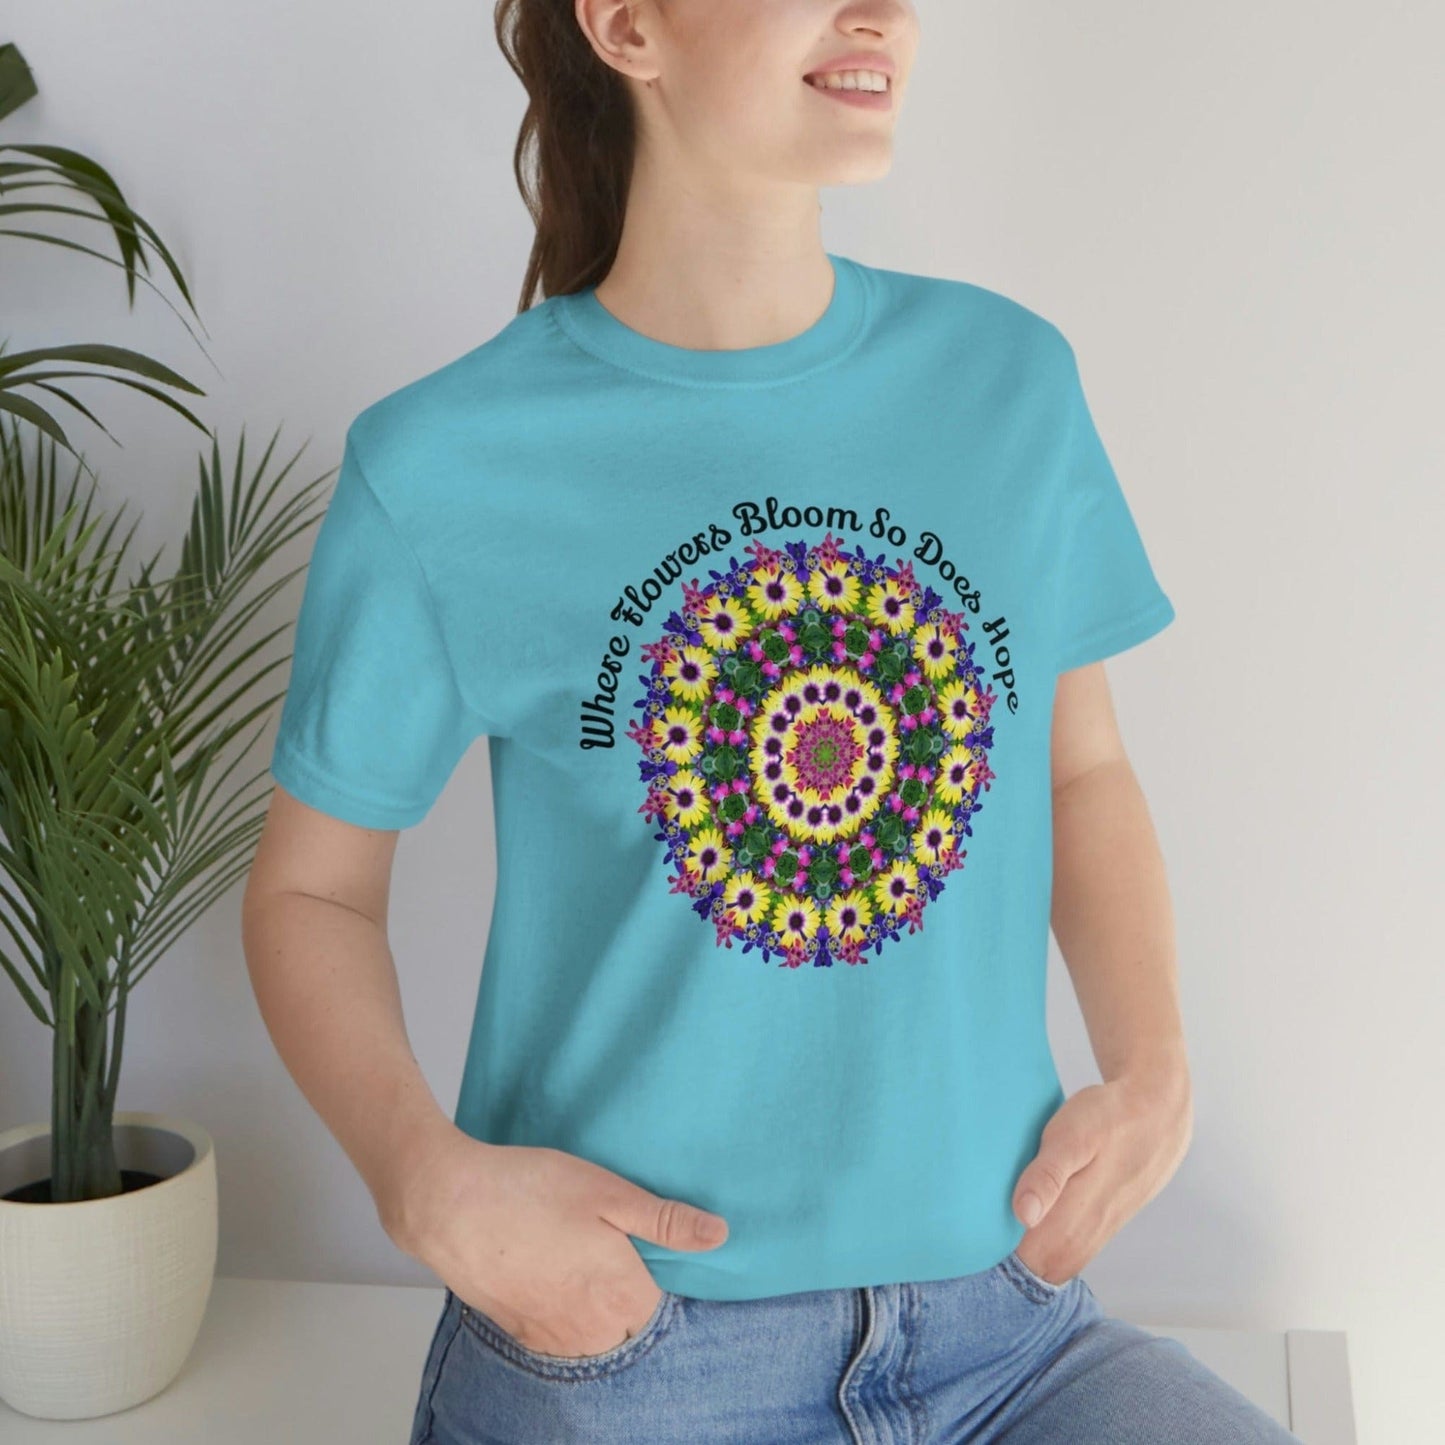 Daisy Love Kindness Shirt, Zen Poet Shirt, Fun Shirt Designs, Cute Shirts, Where Flowers Bloom So Does Hope